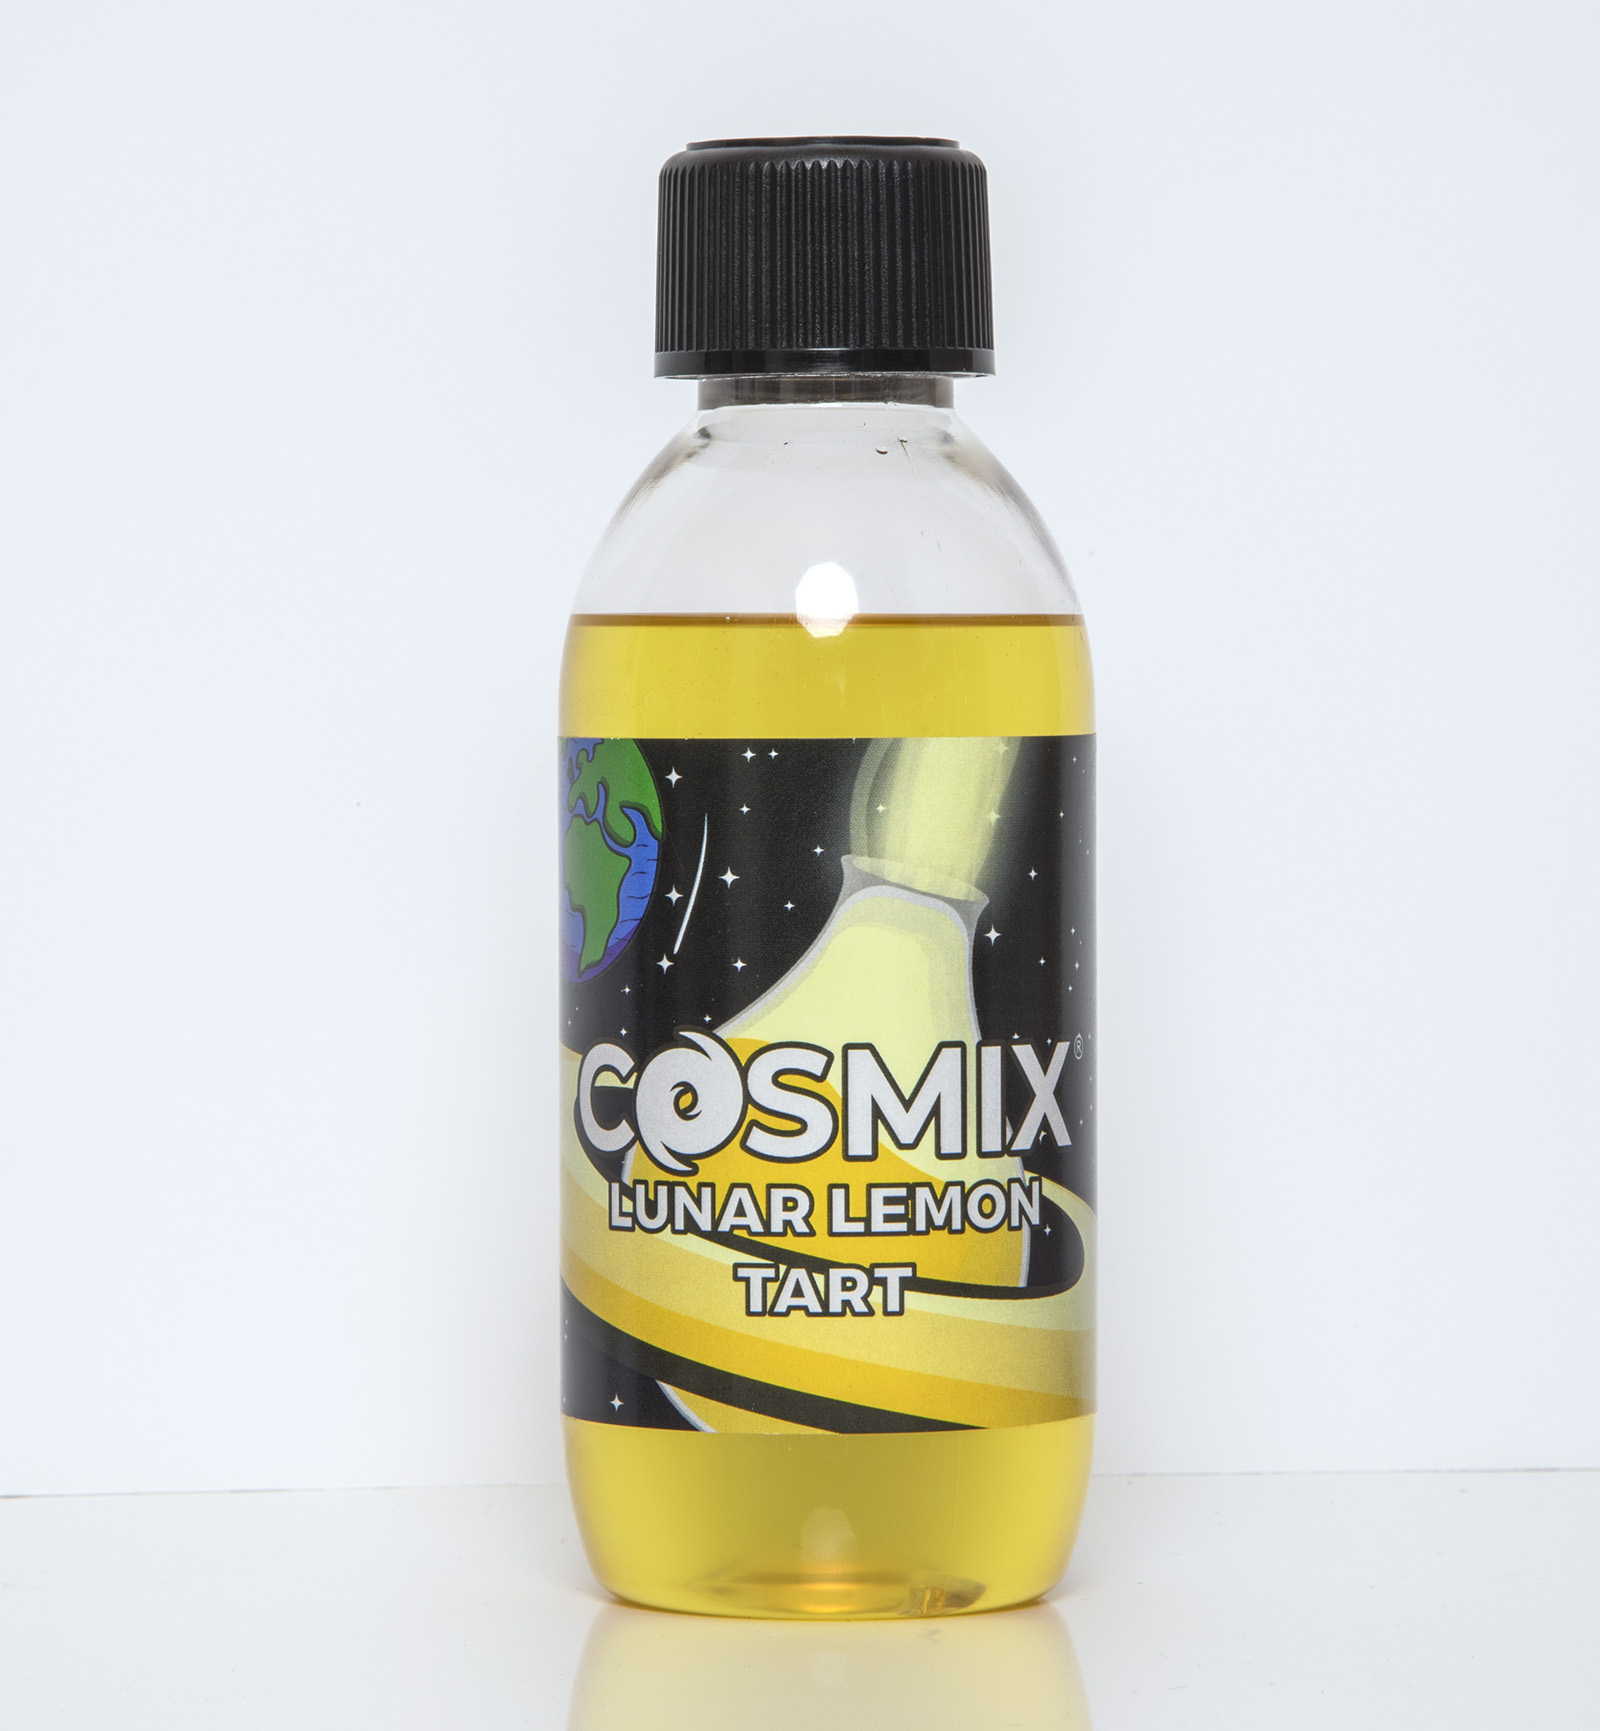 Cosmix-Lunar-Lemon-Tart-1.jpg